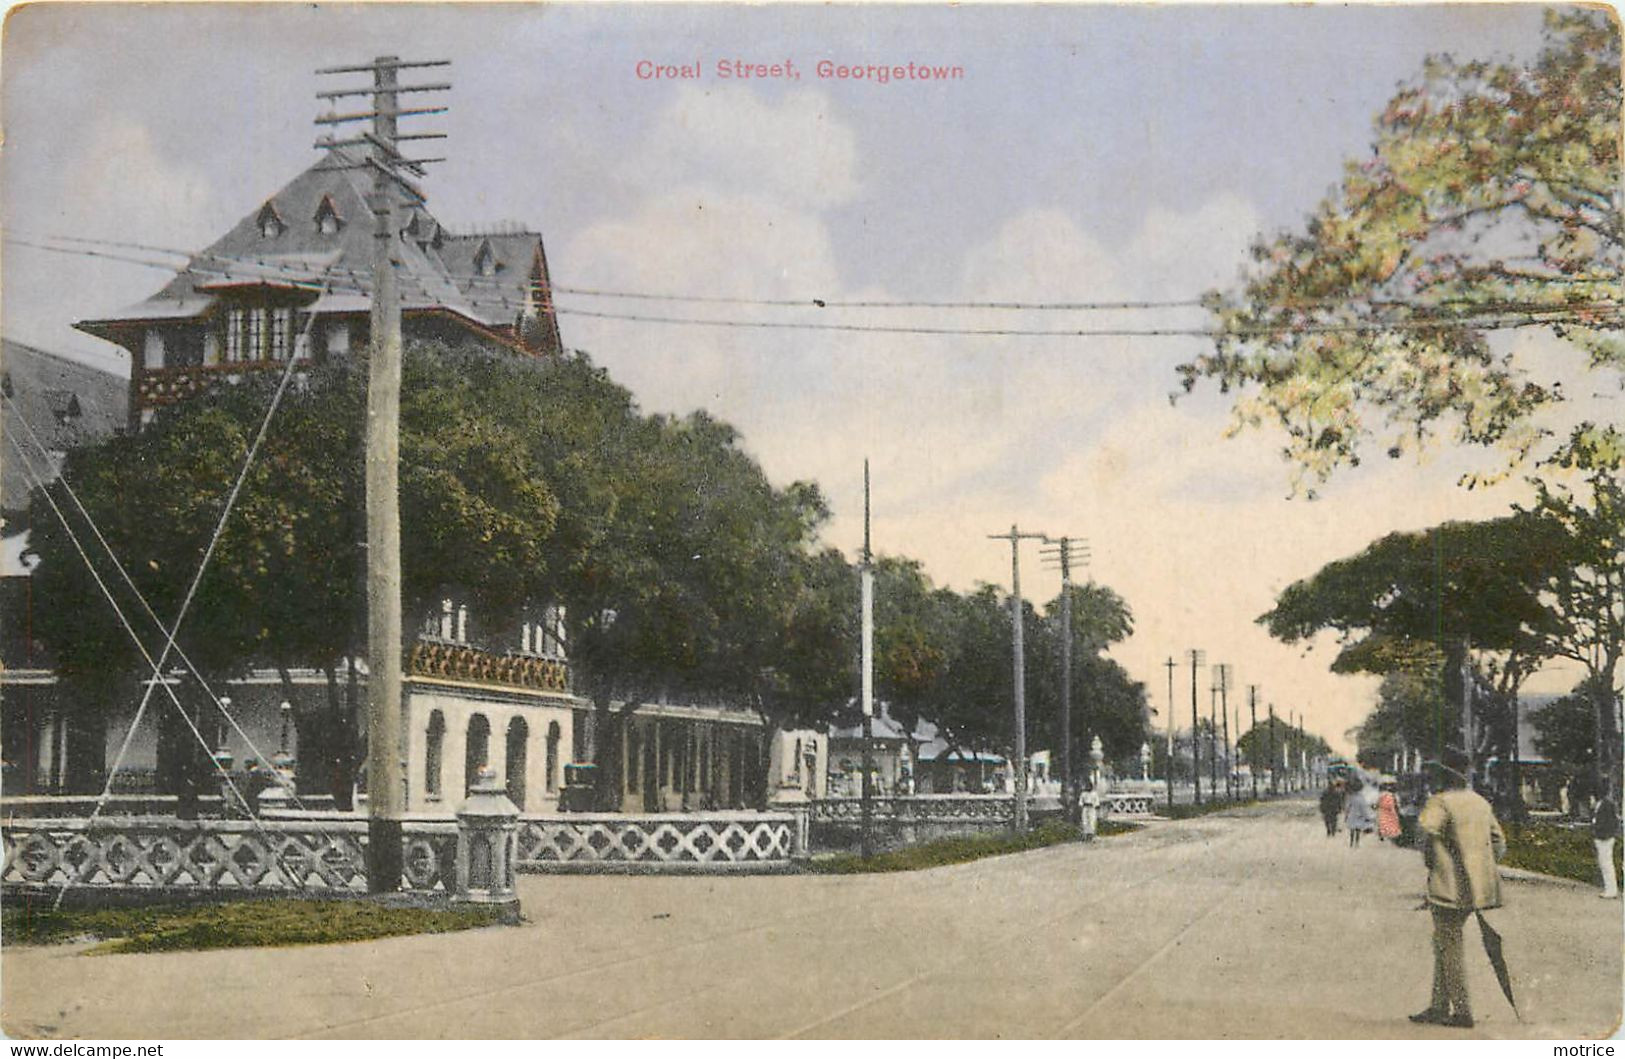 GEORGETOWN - Croal Street. - Guyana (formerly British Guyana)